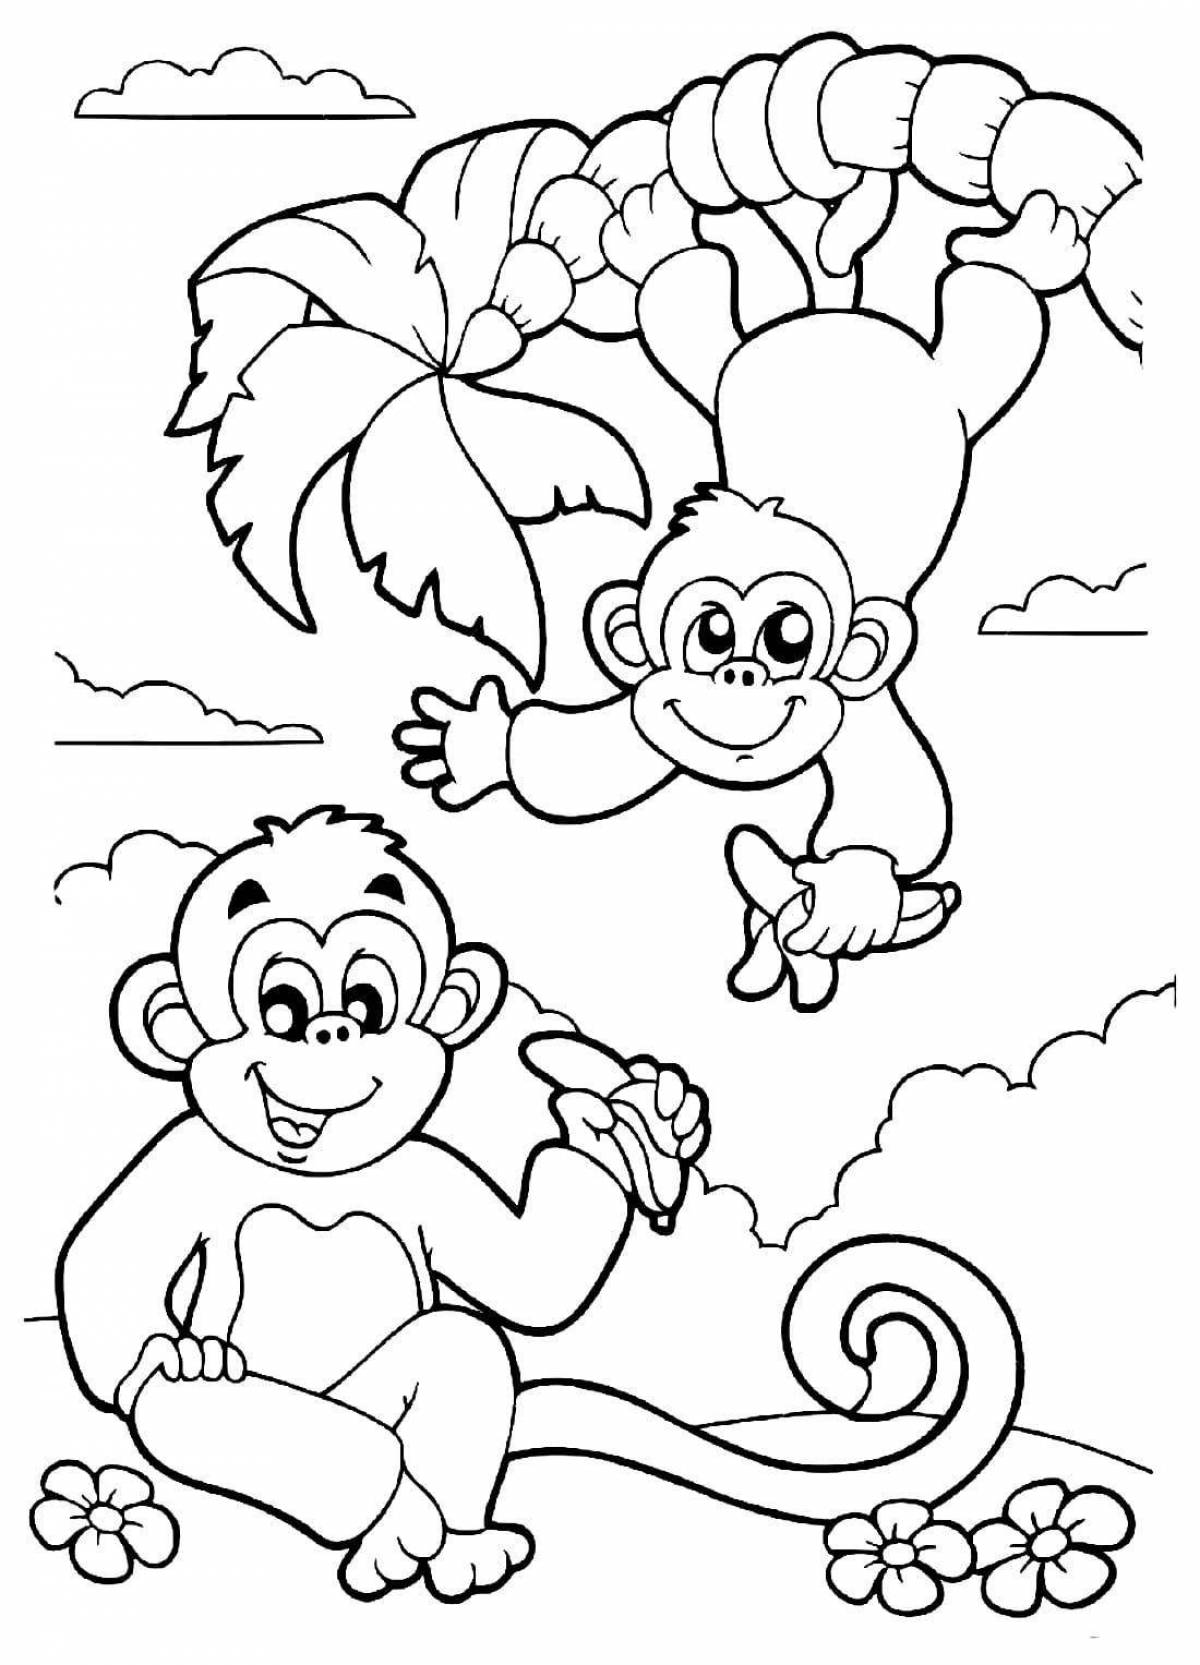 Раскраска обезьяна с бананом